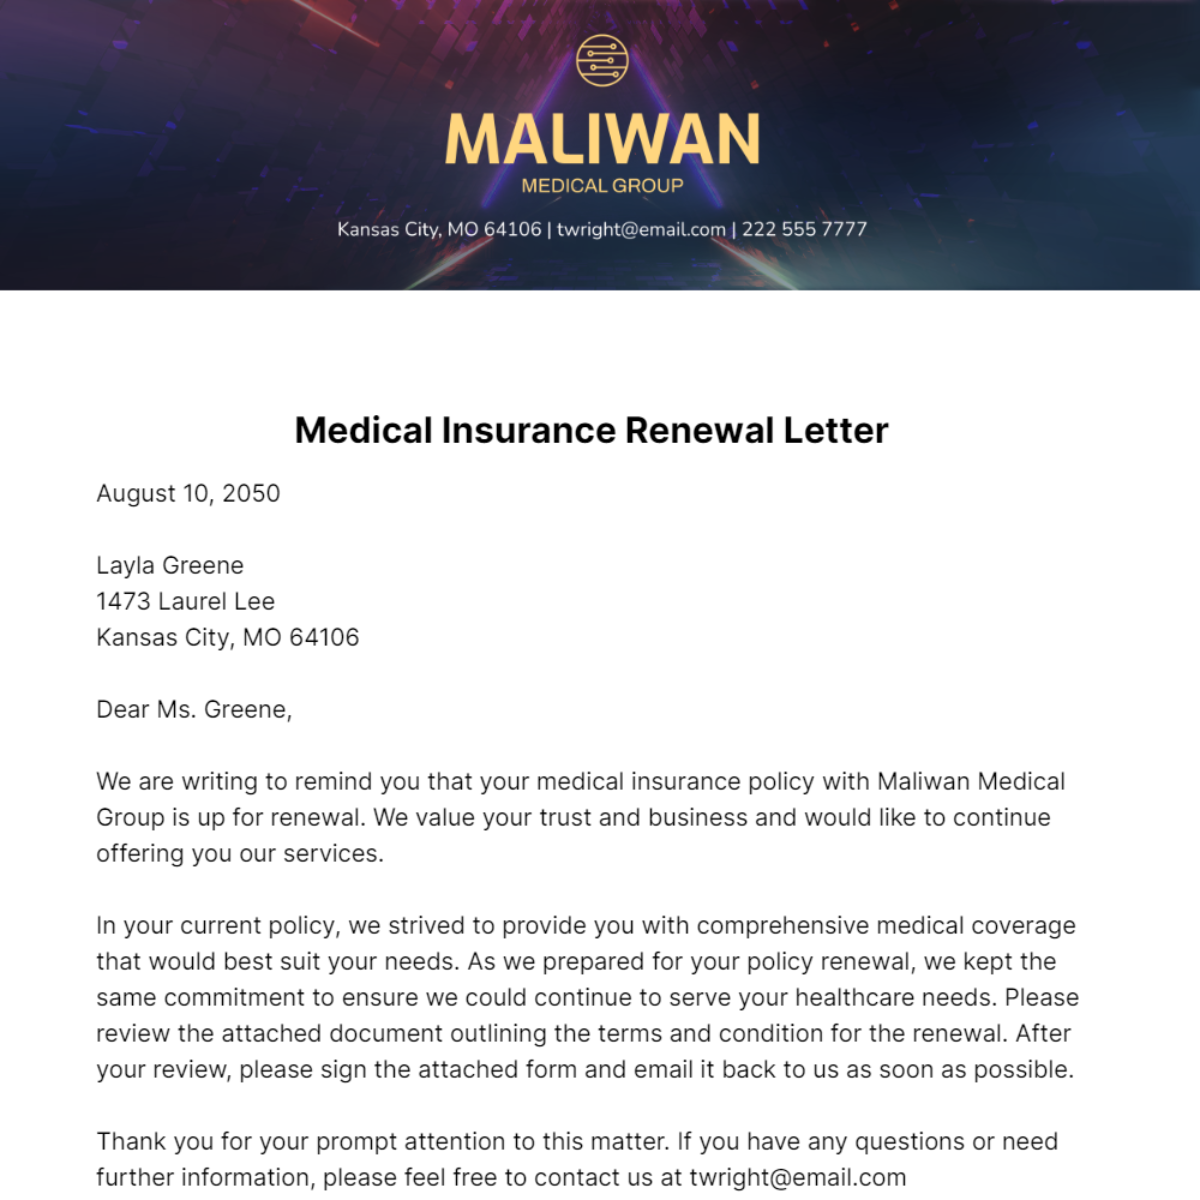 Medical Insurance Renewal Letter   Template